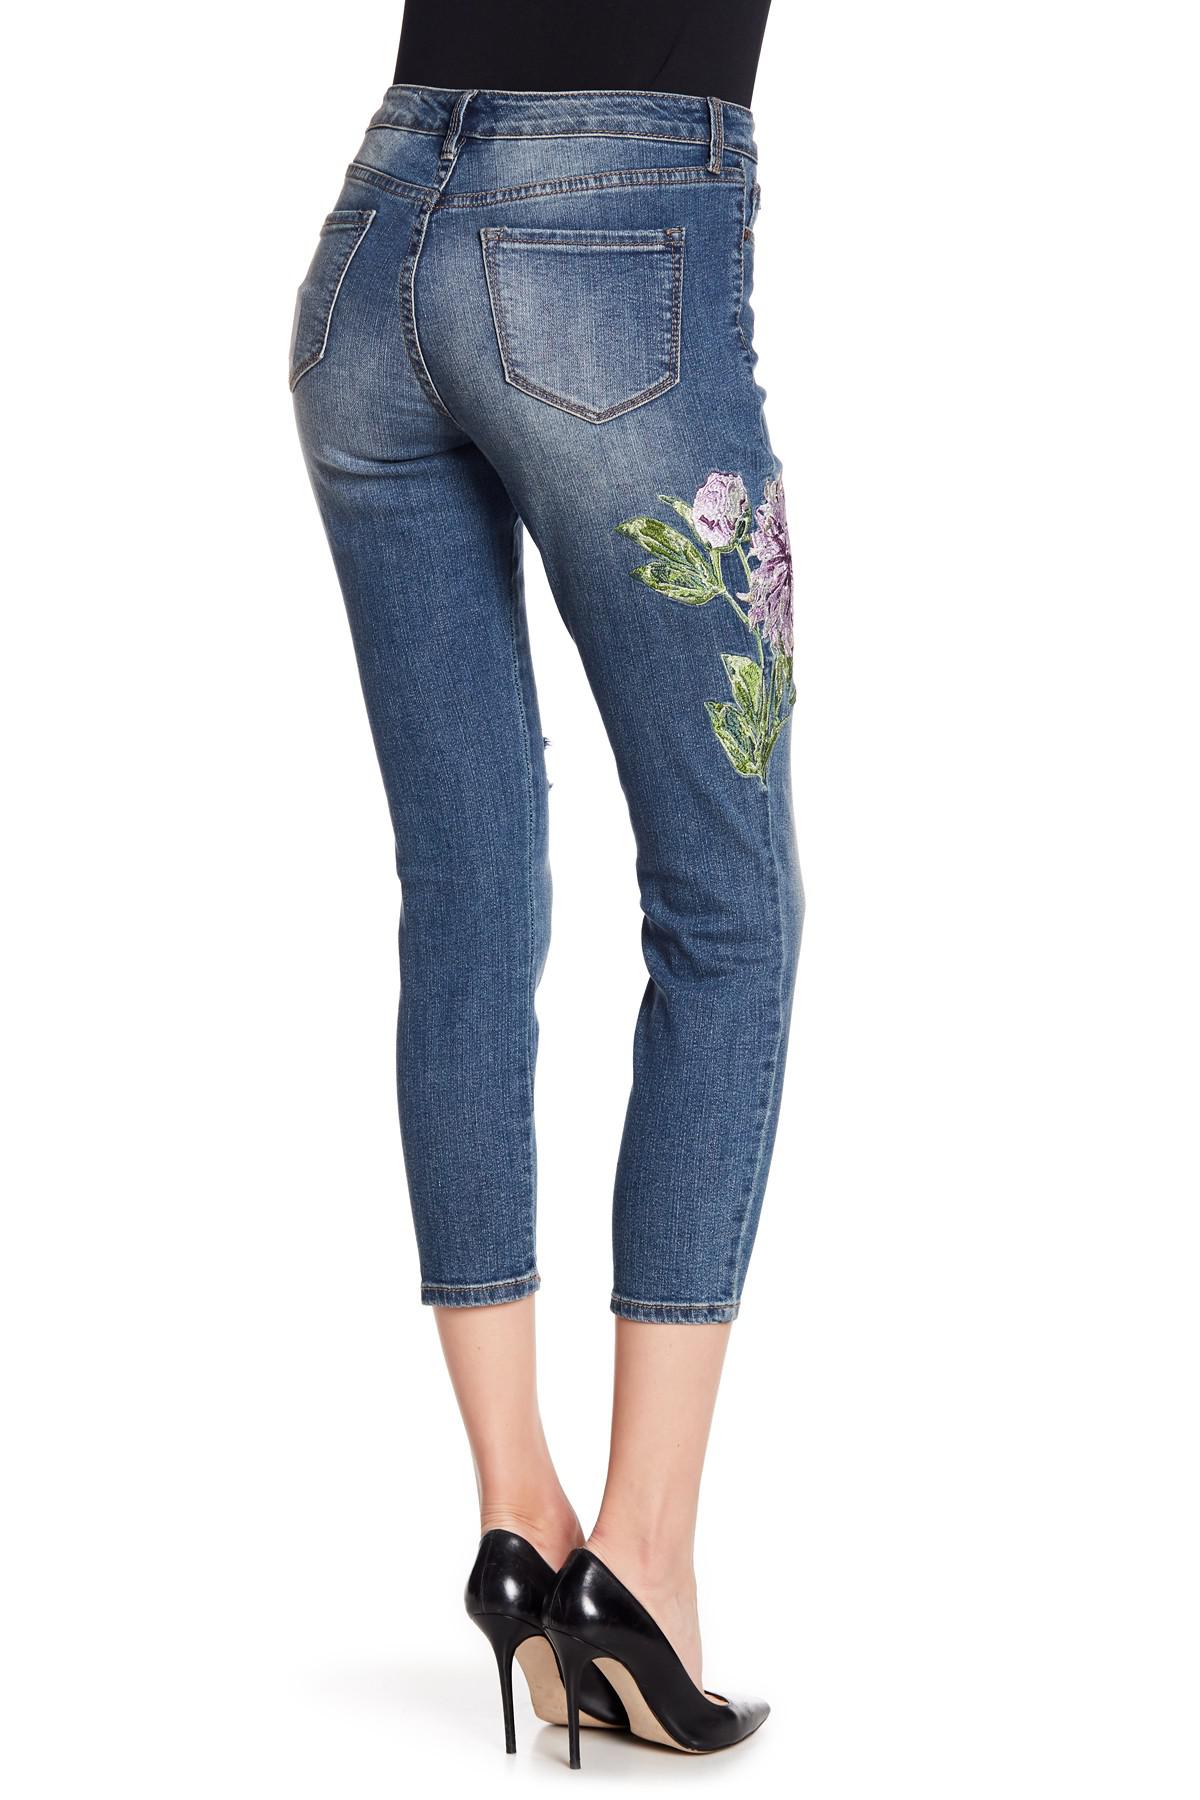 Nine West Denim Gramercy Floral Embroidered Skinny Jeans in Blue - Lyst